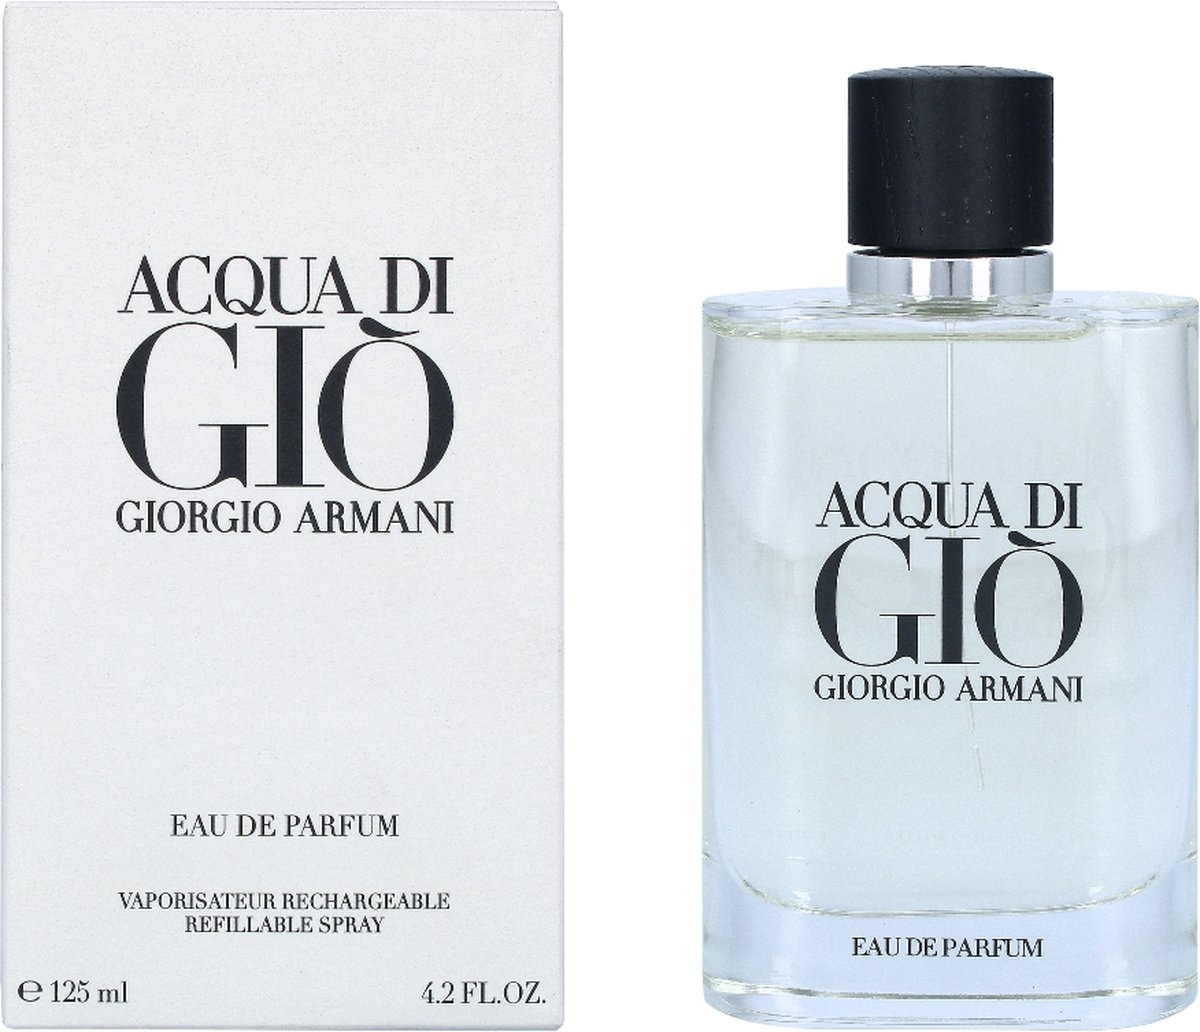 Armani Acqua Di Gio Man 125ml Eau De Parfum - Men's perfume - Packaging damaged